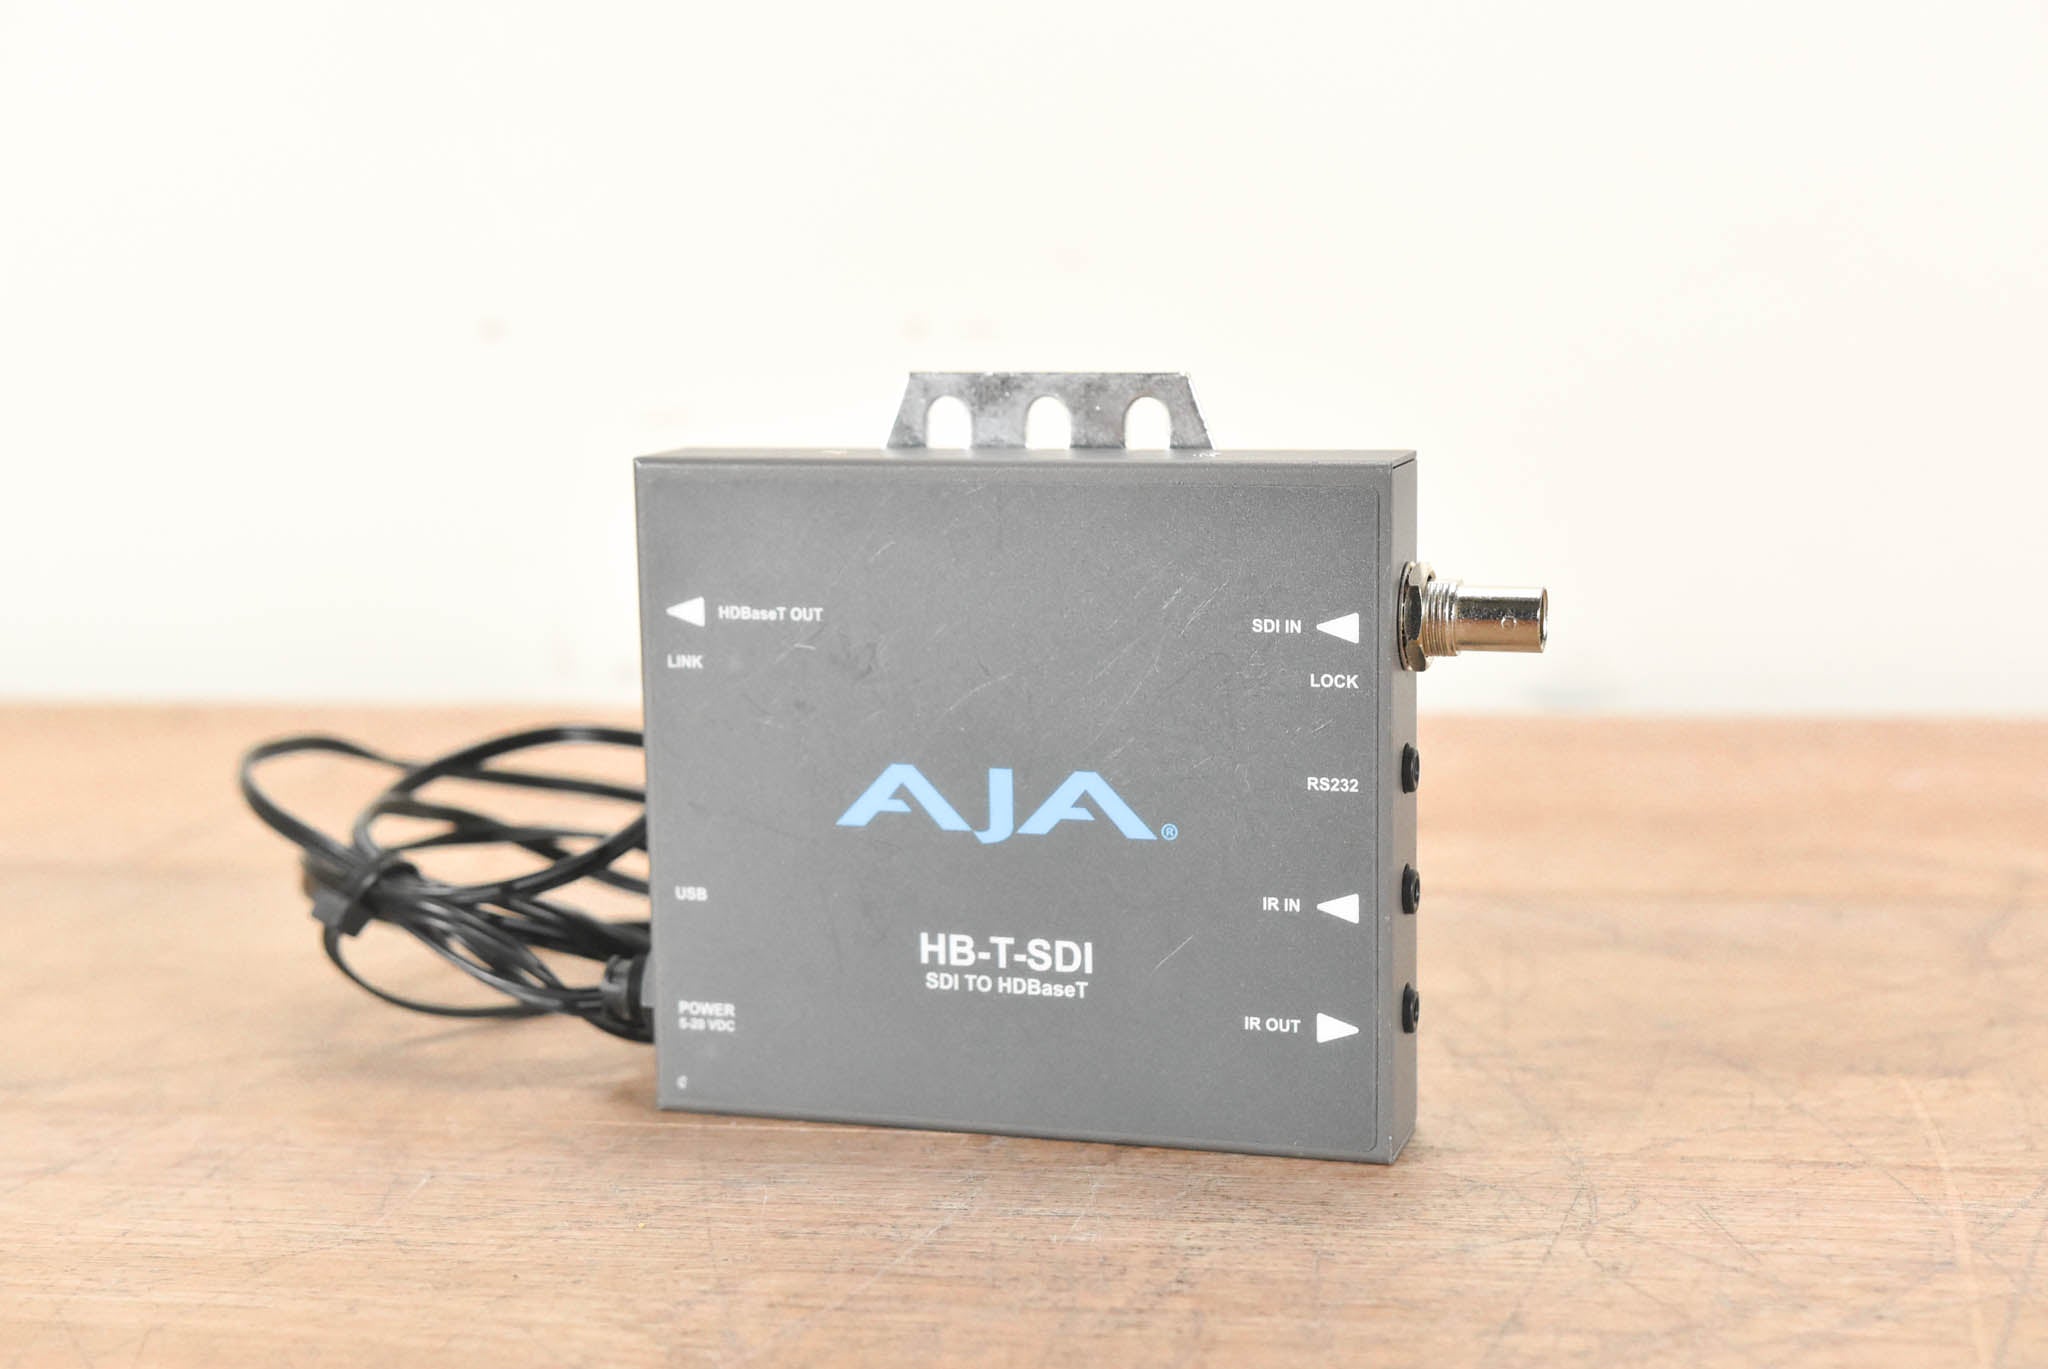 AJA HB-T-SDI SDI to HDBaseT Transmitter